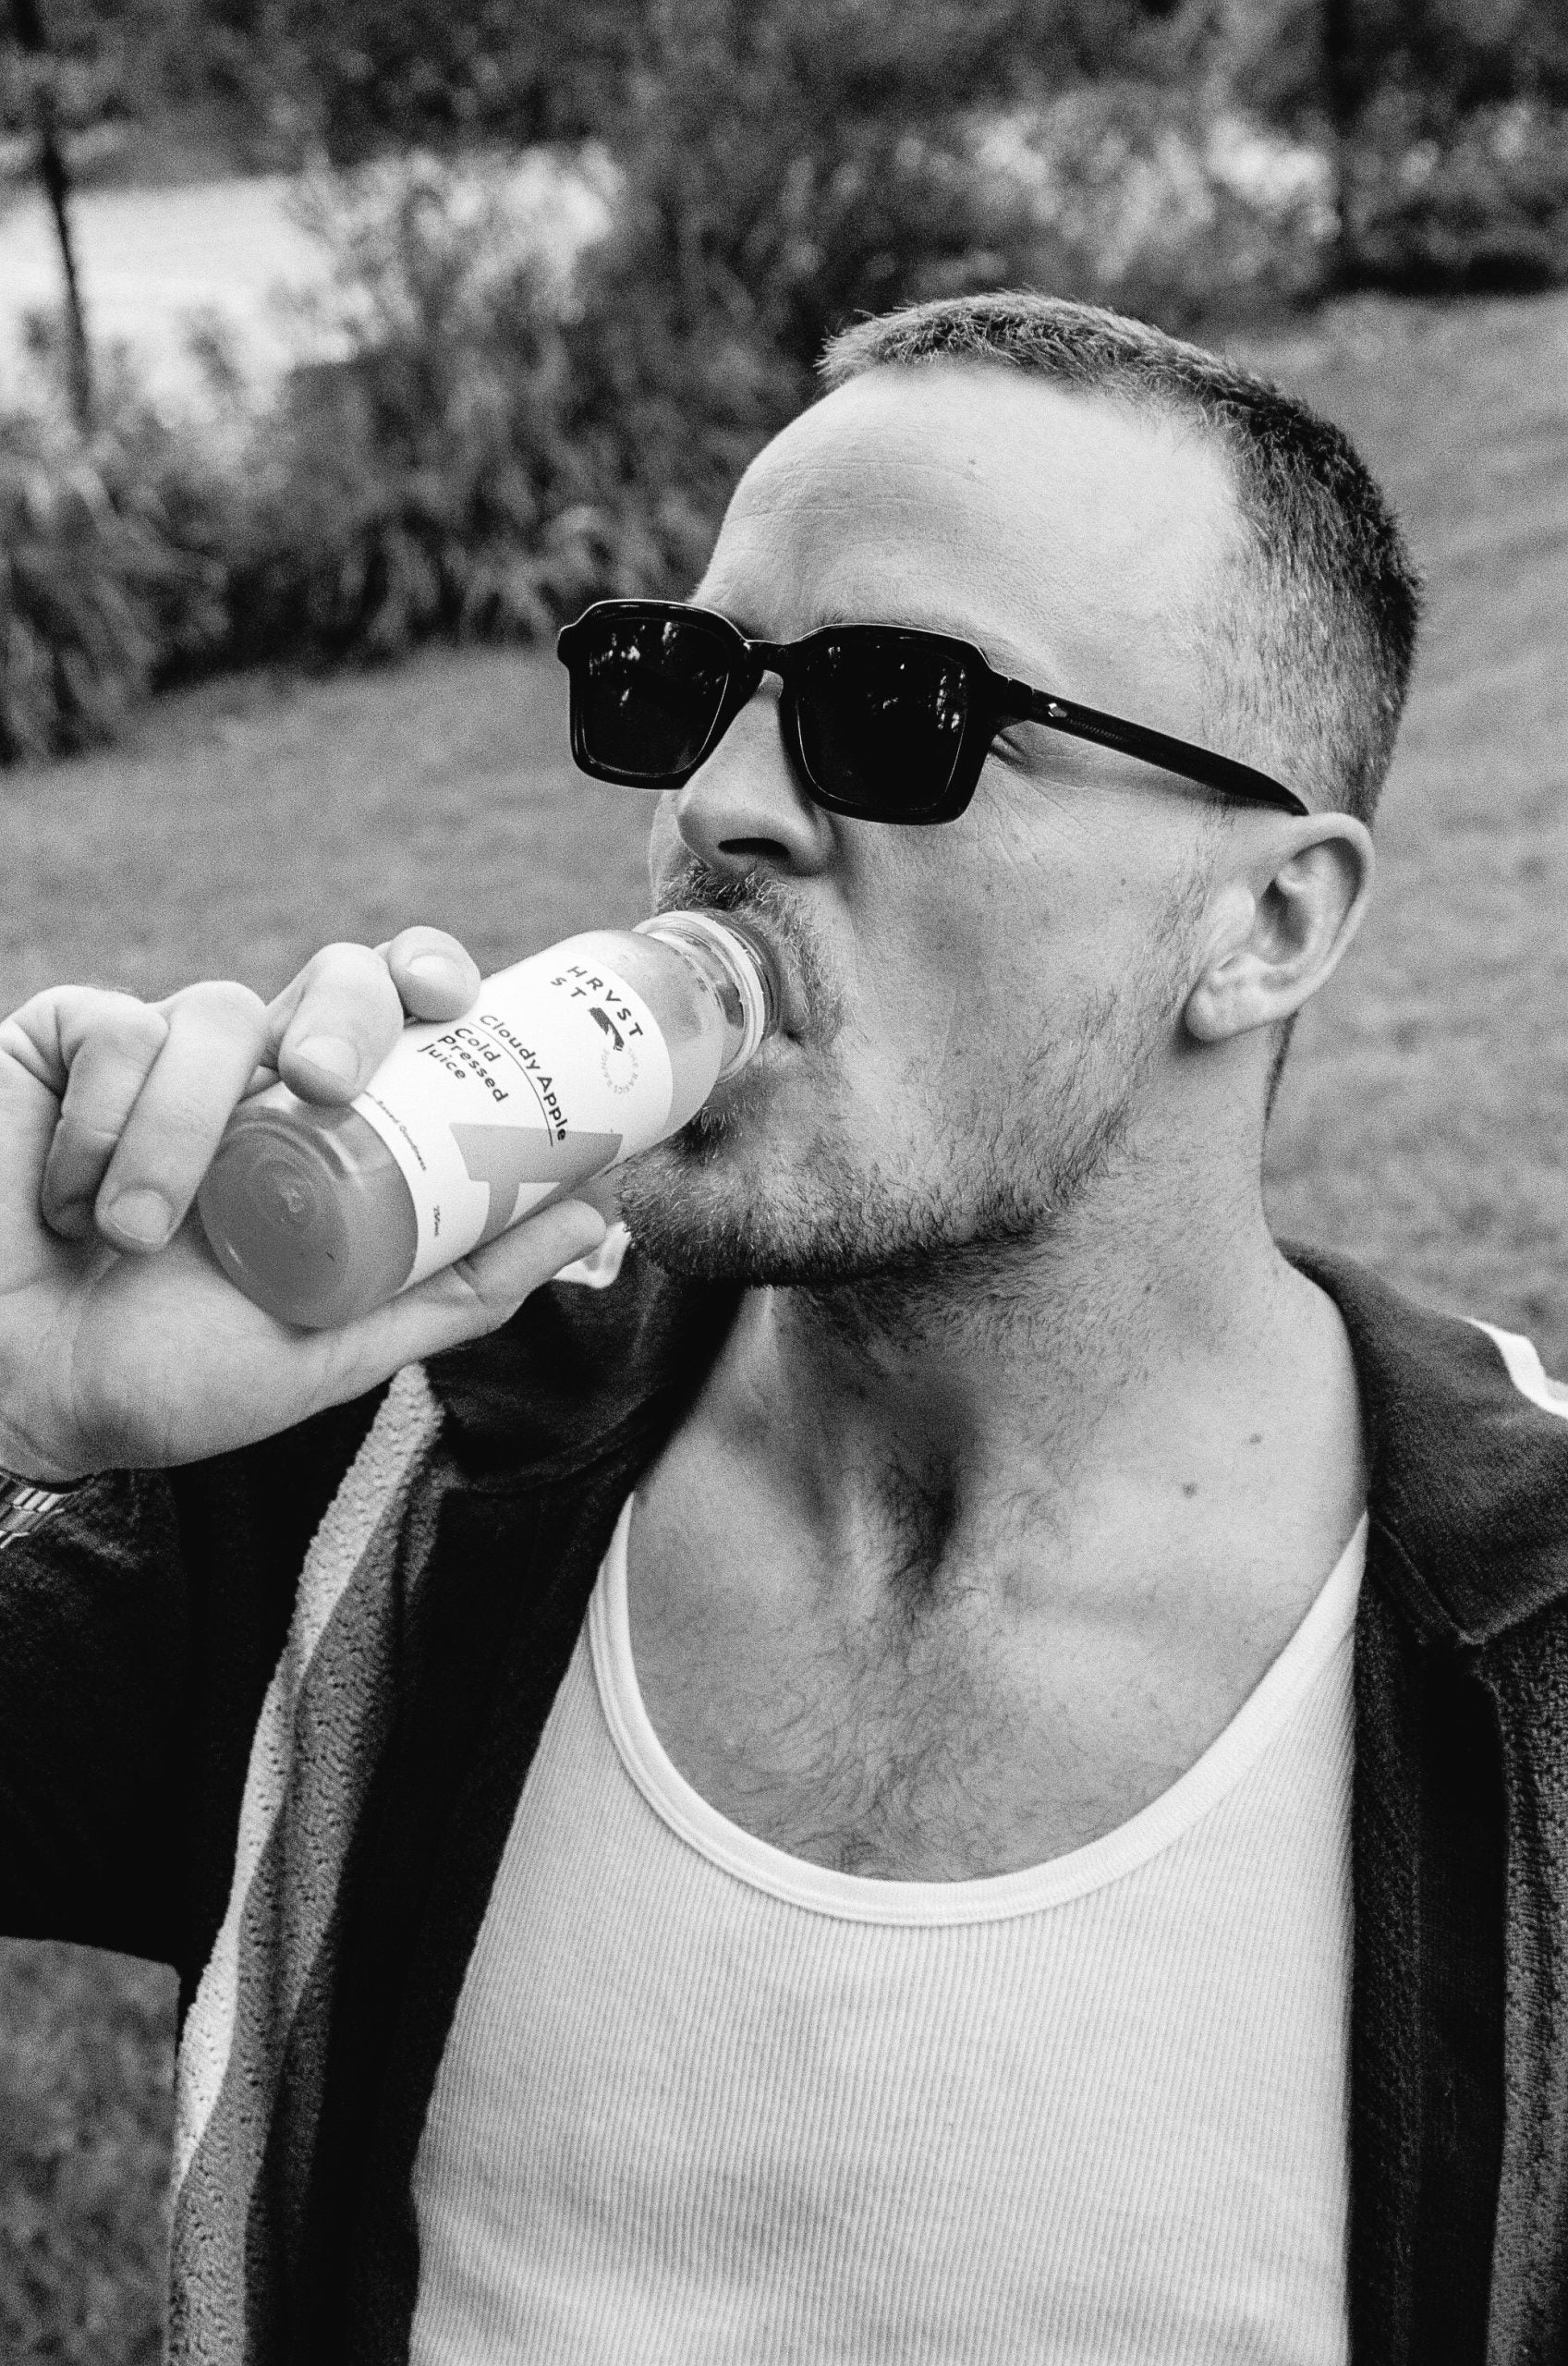 Australian man drinking Hrvst St juice looking cool